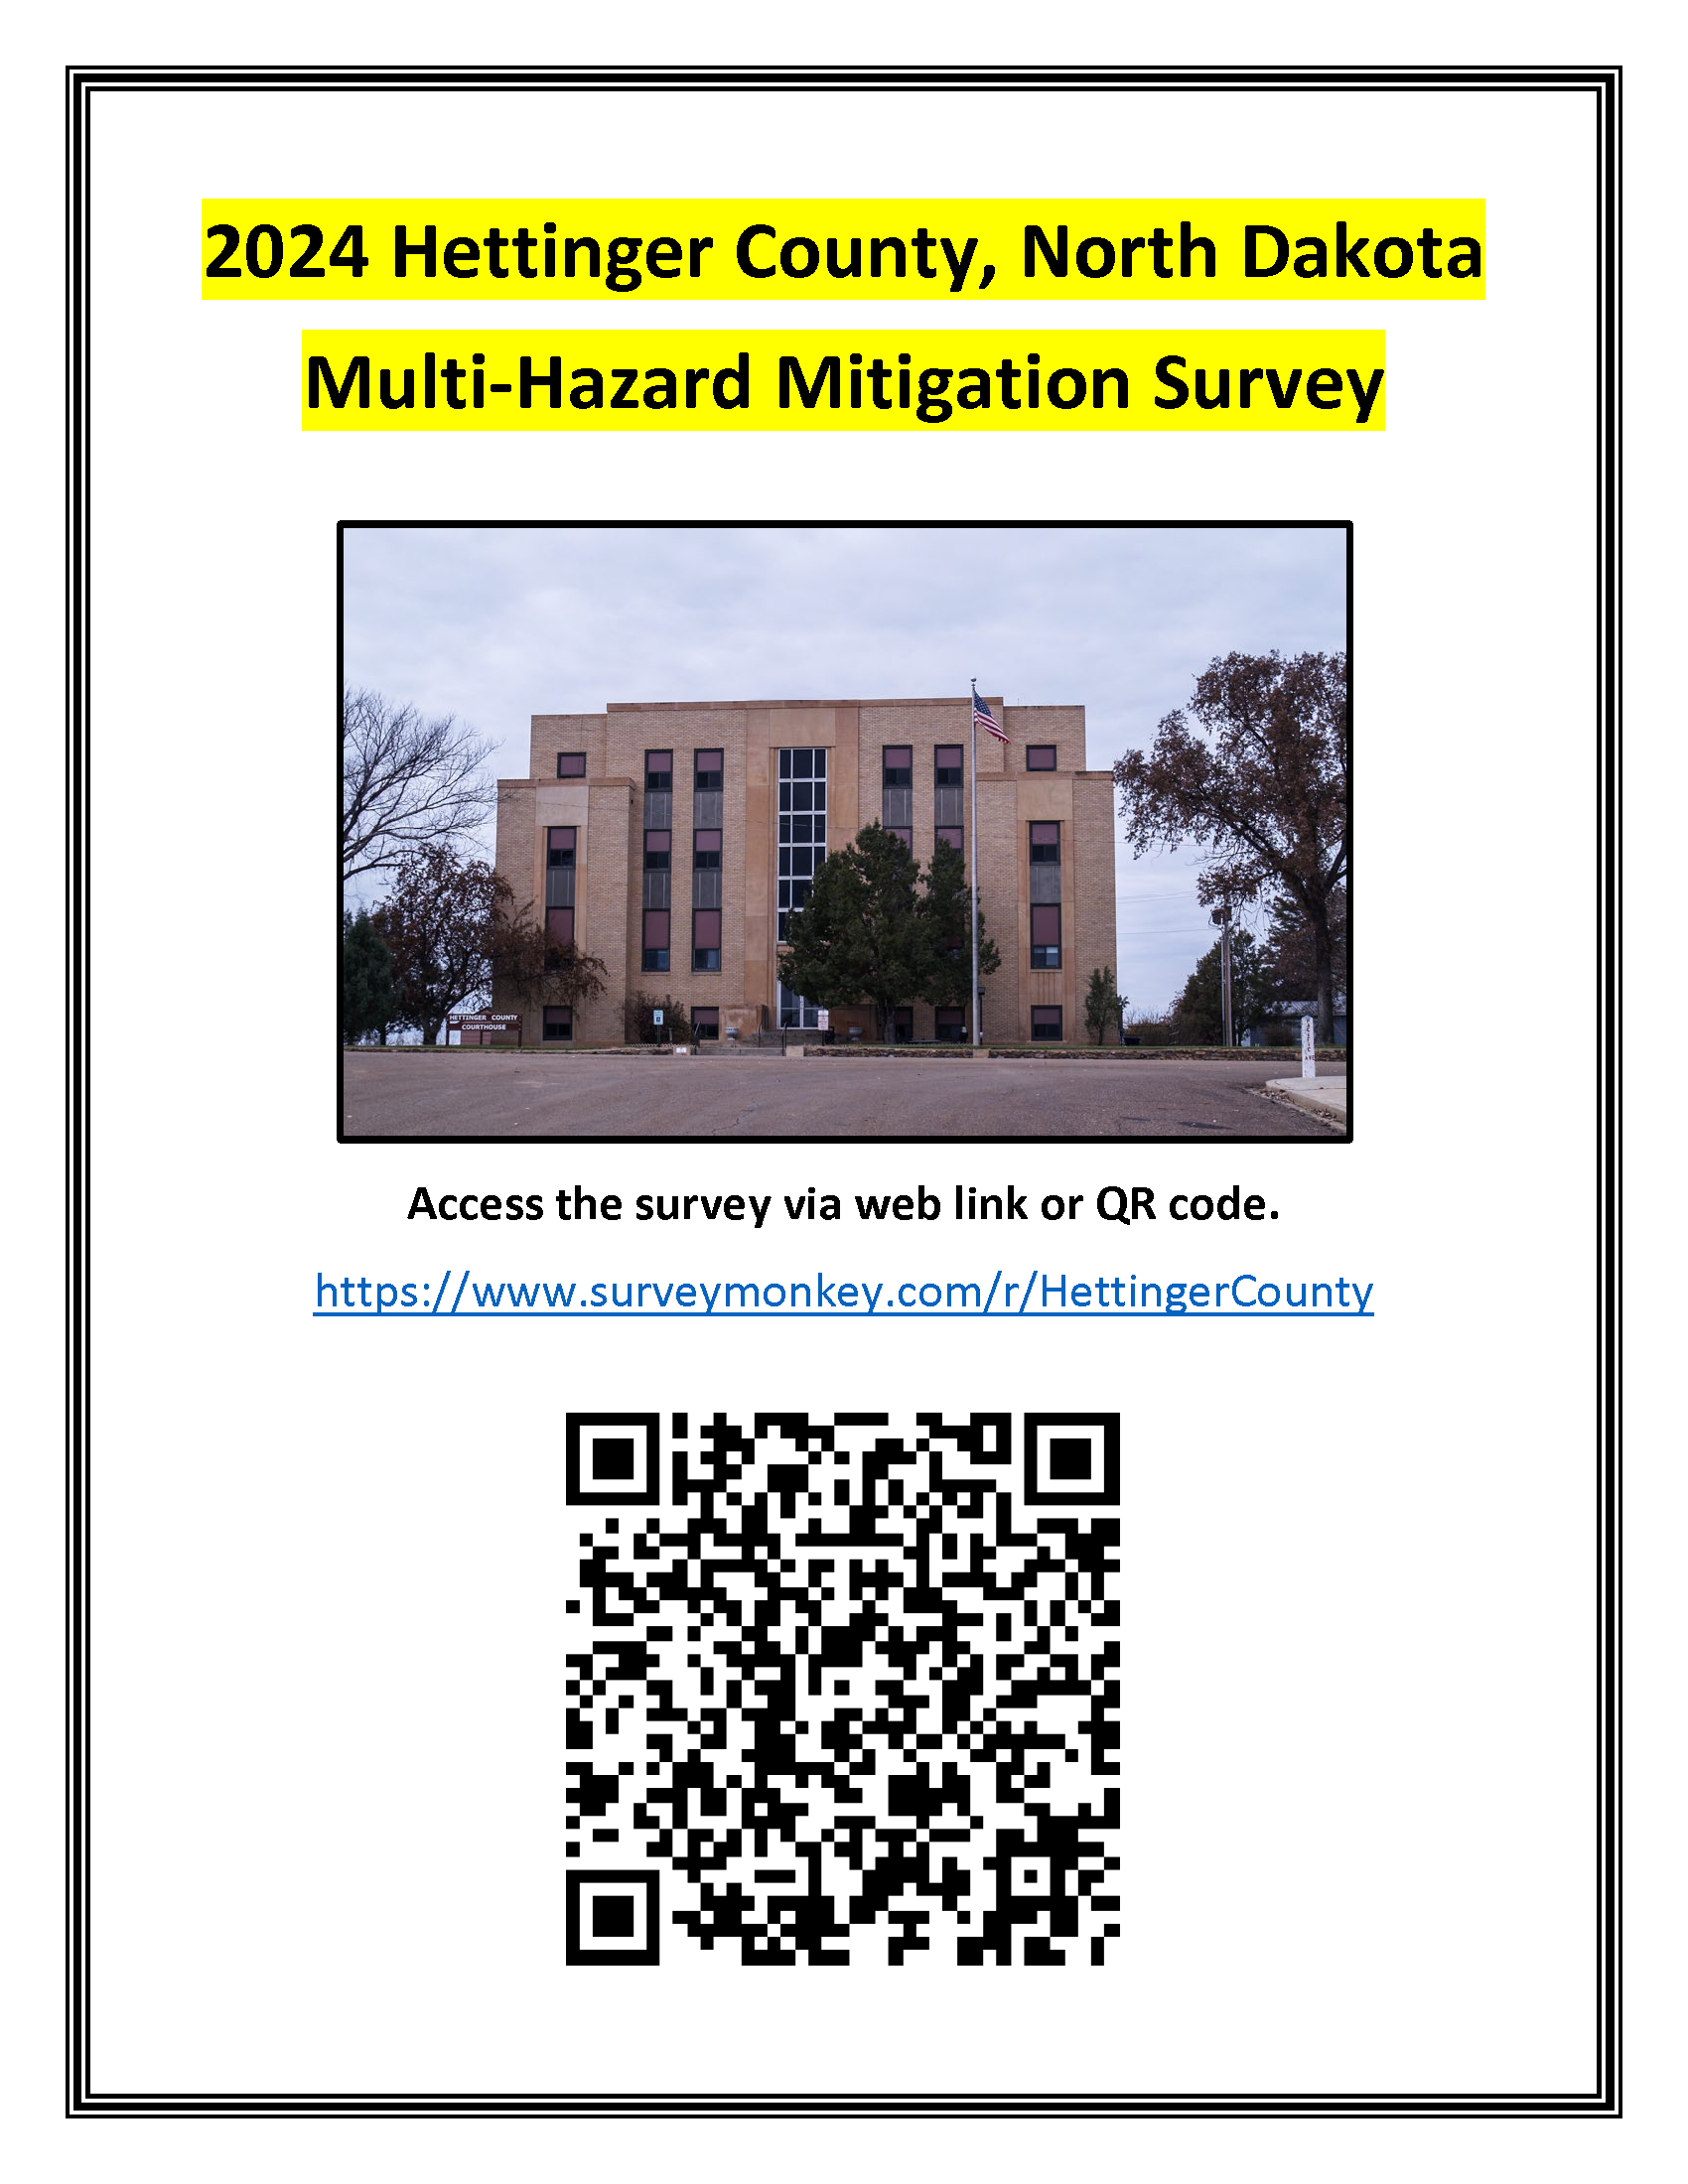 2024 Hettinger County Mitigation Survey Flyer